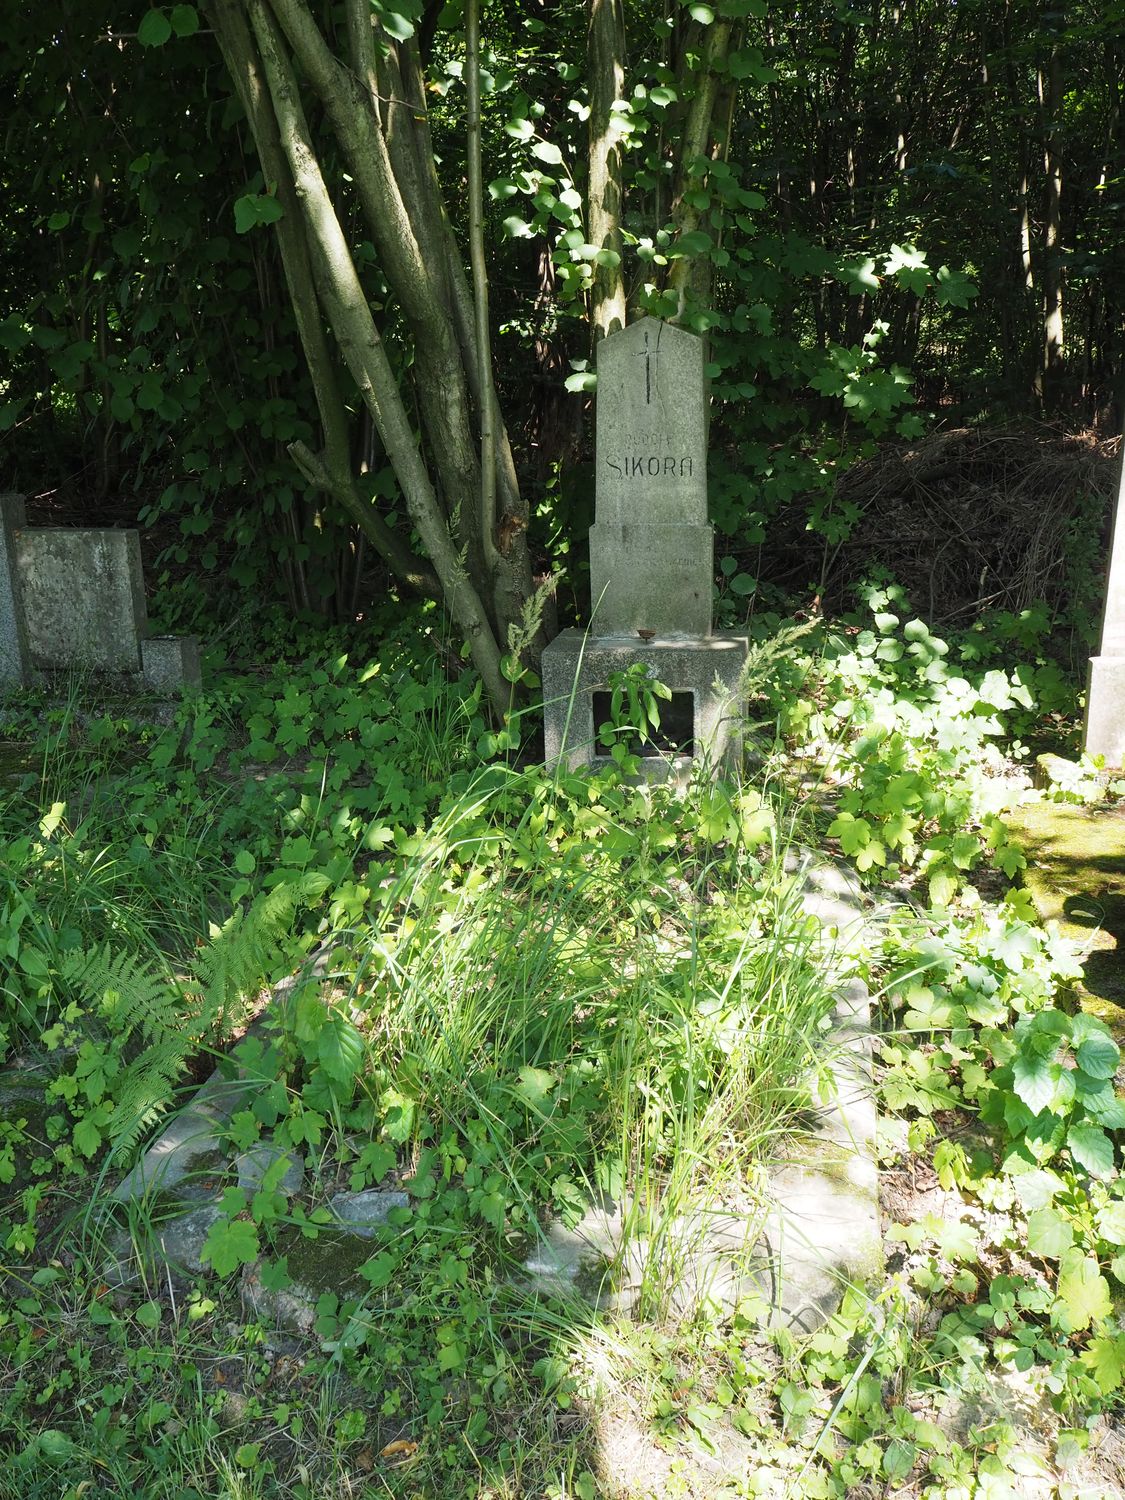 Tombstone of Rudolf Sikora, cemetery in Karviná Mexico, as of 2022.